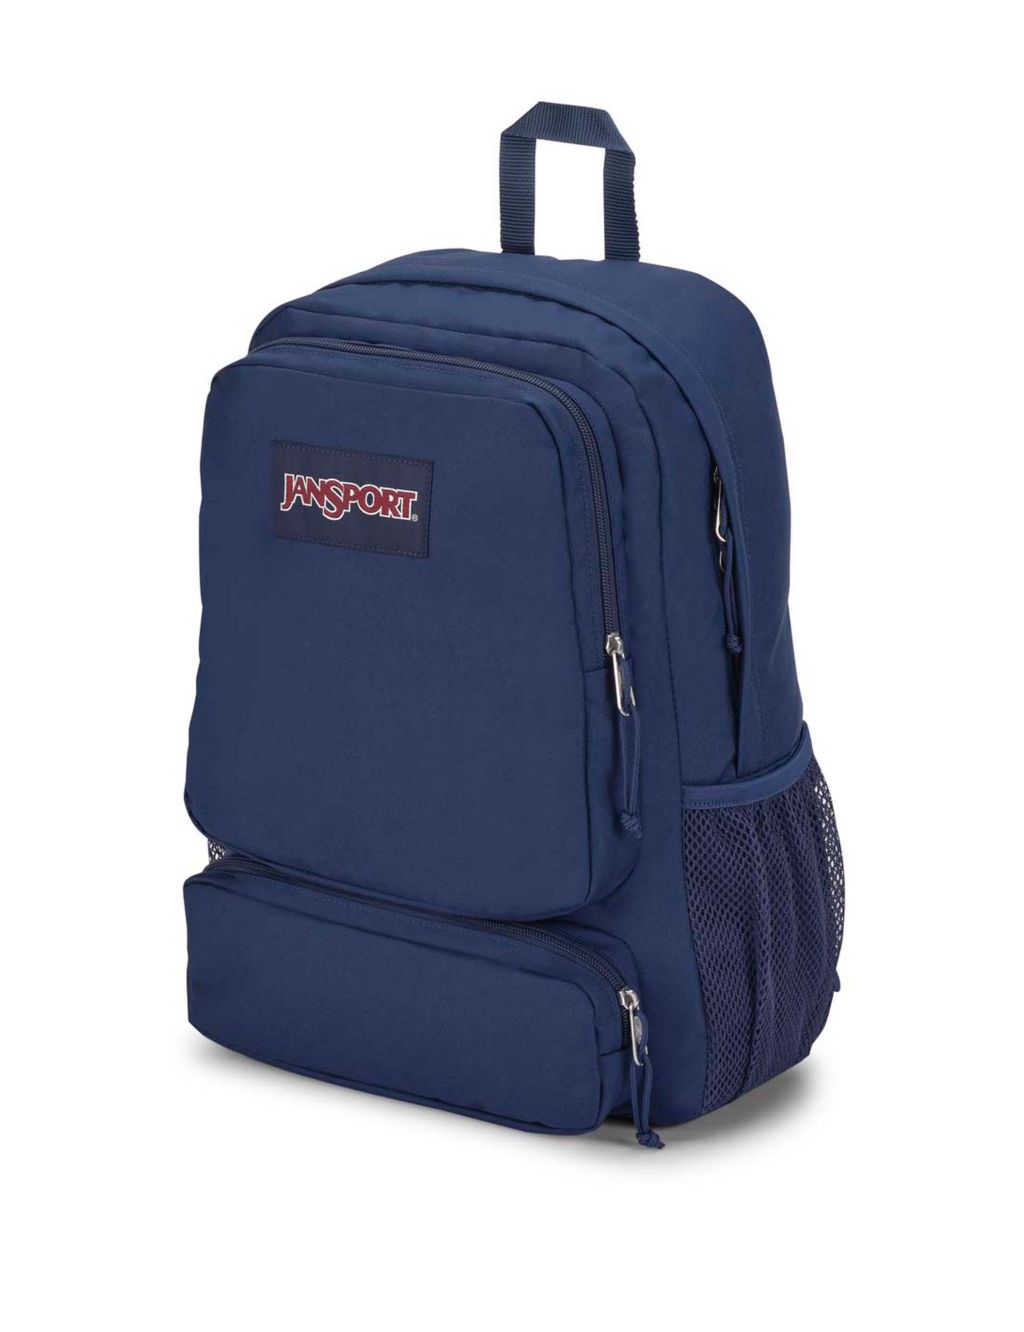 Doubleton Multi Pocket Backpack image 2